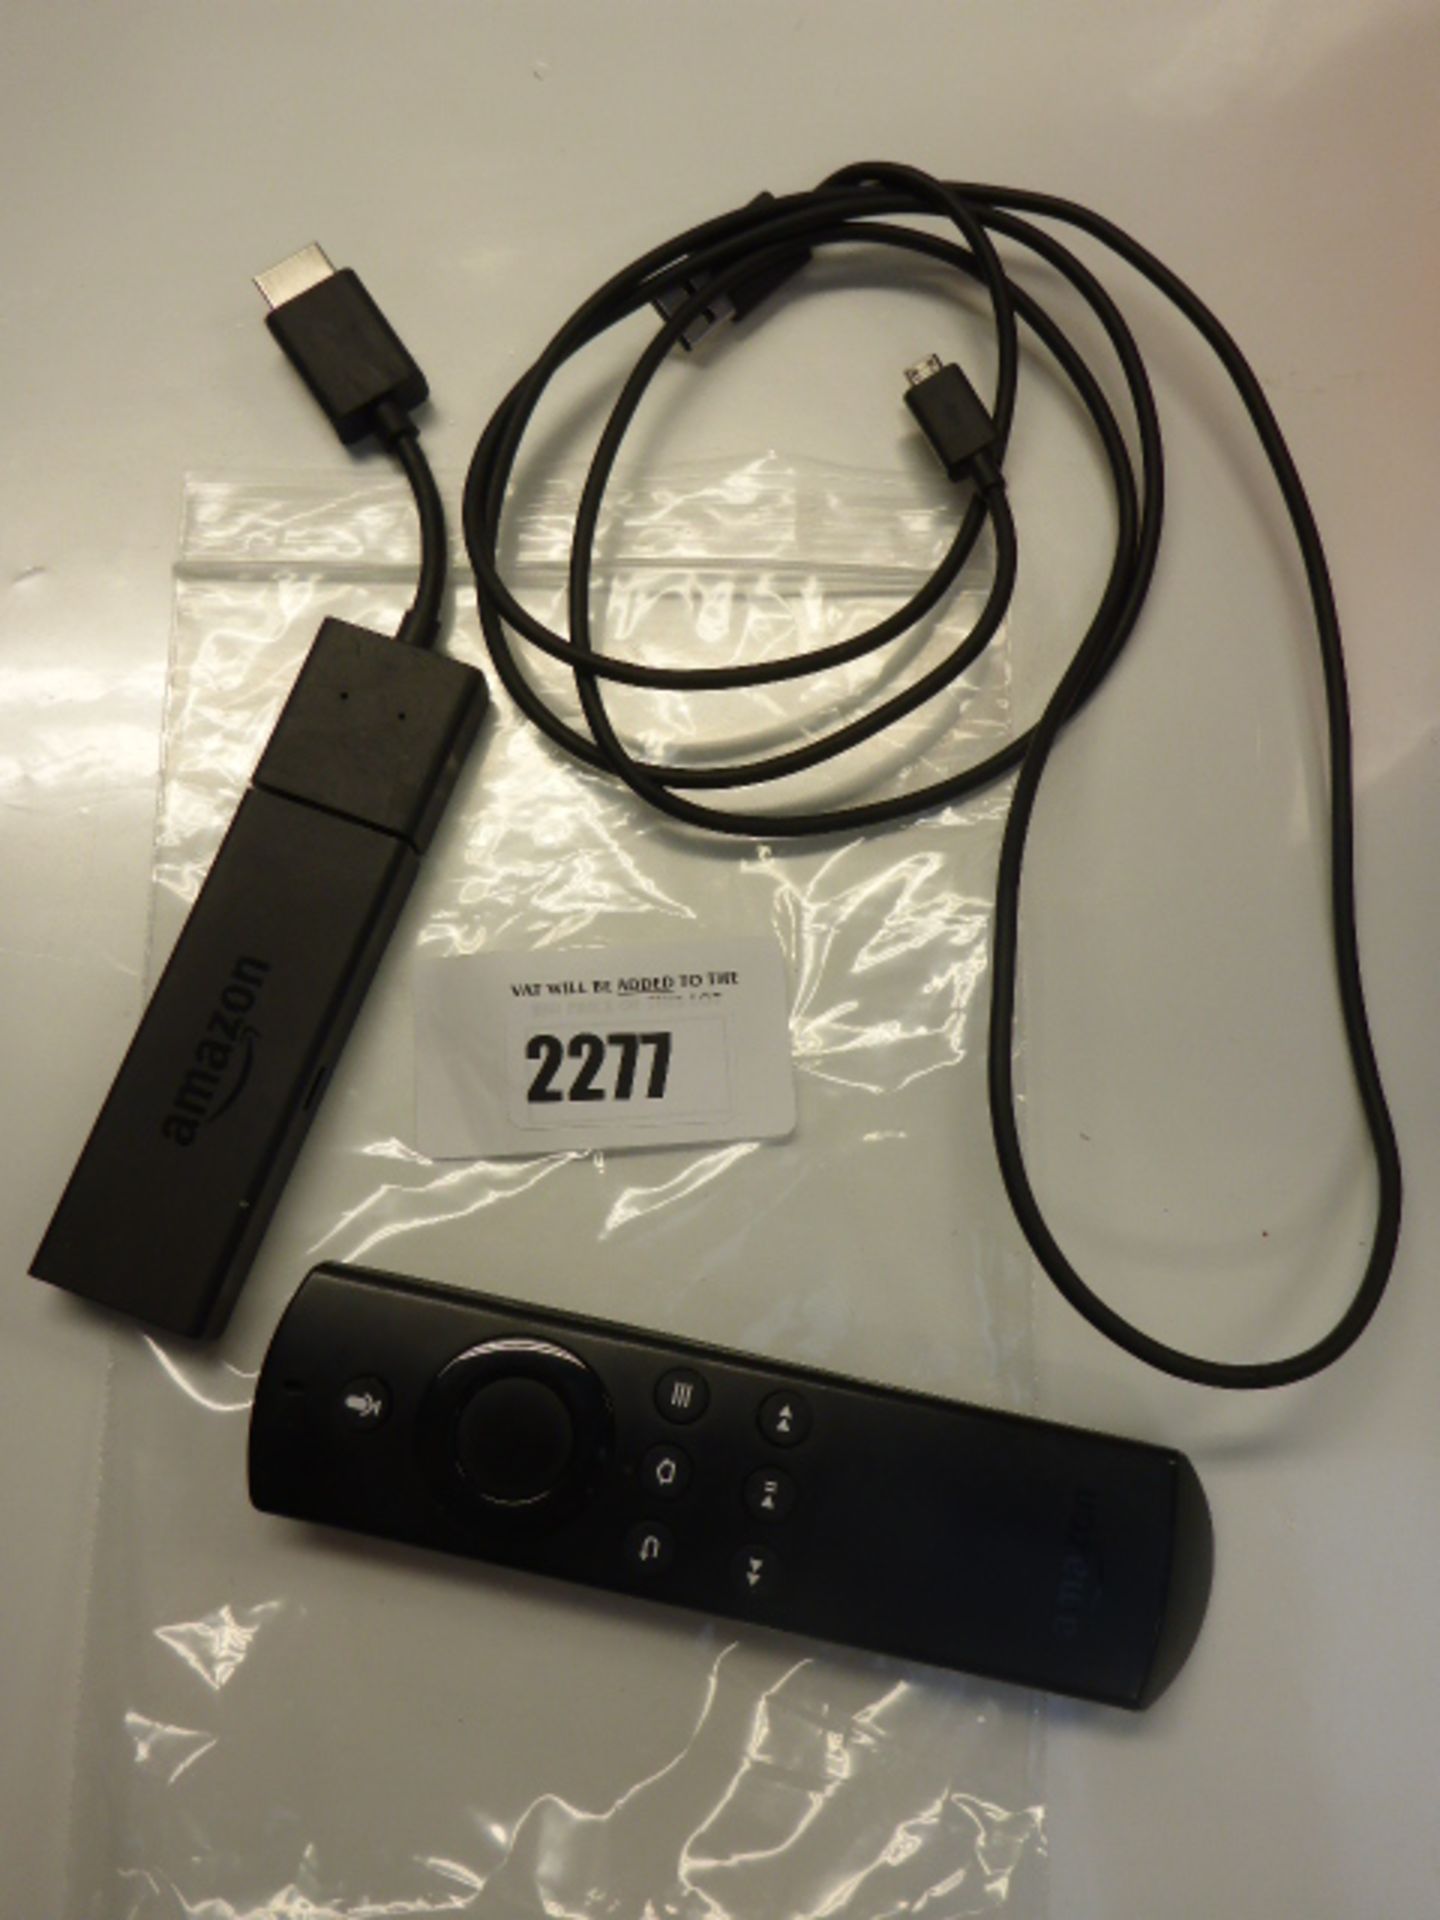 Amazon FireTV stick and remote